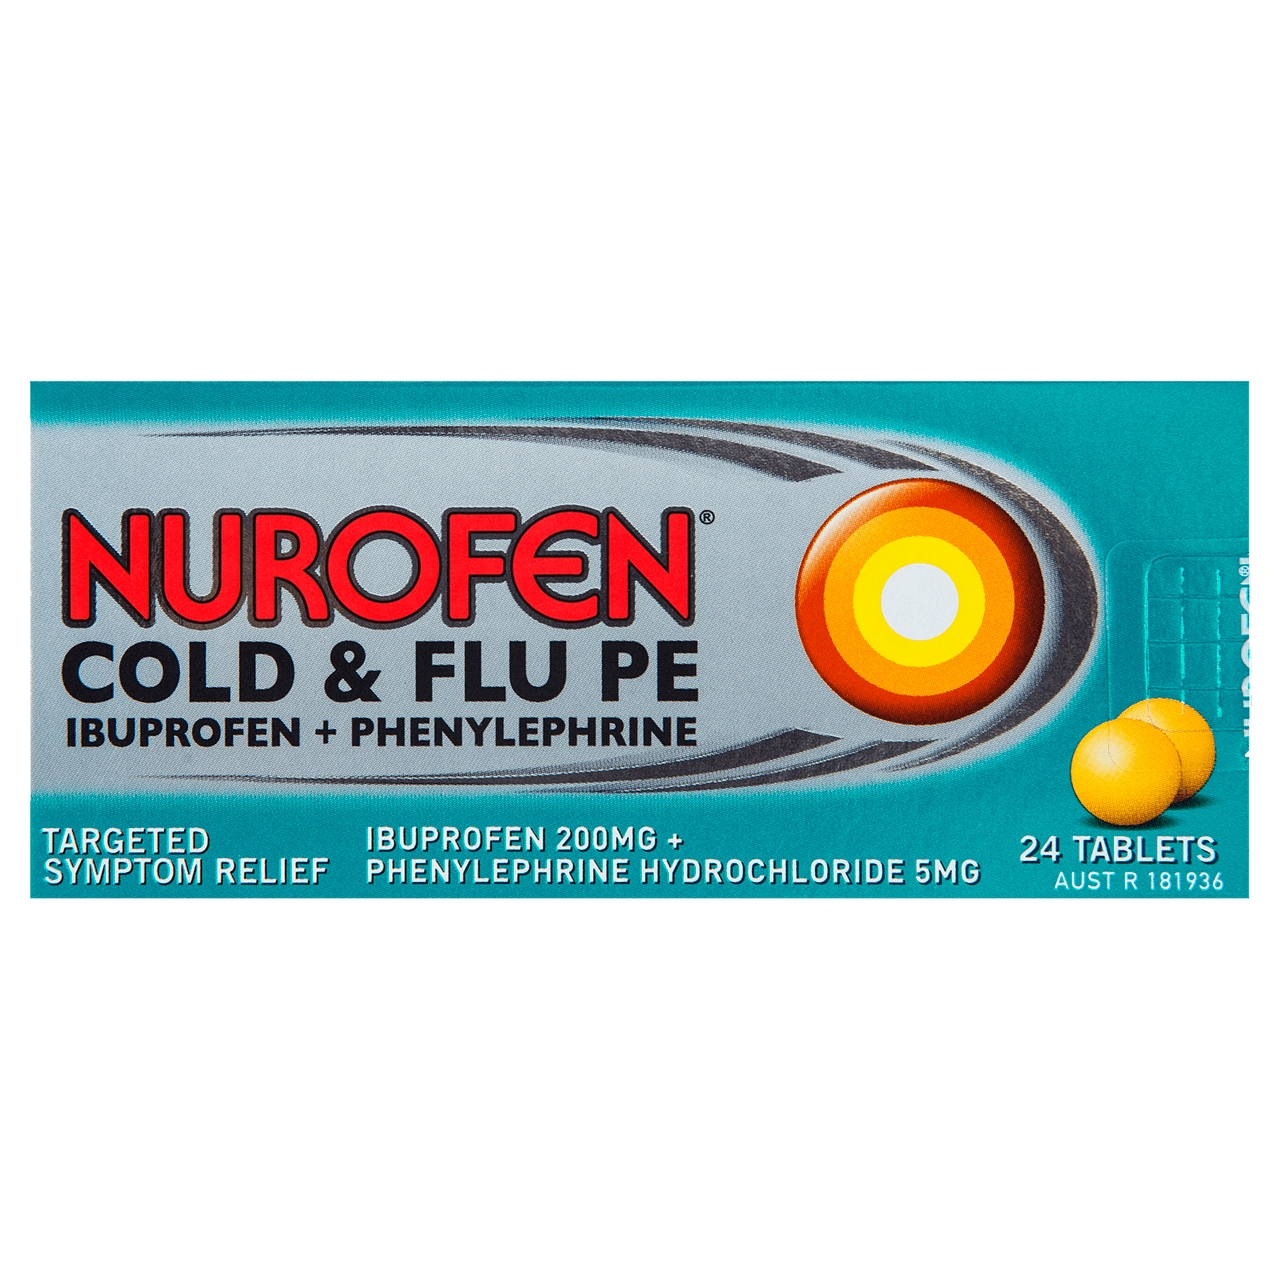 Nurofen Cold and Flu SVG Clip arts